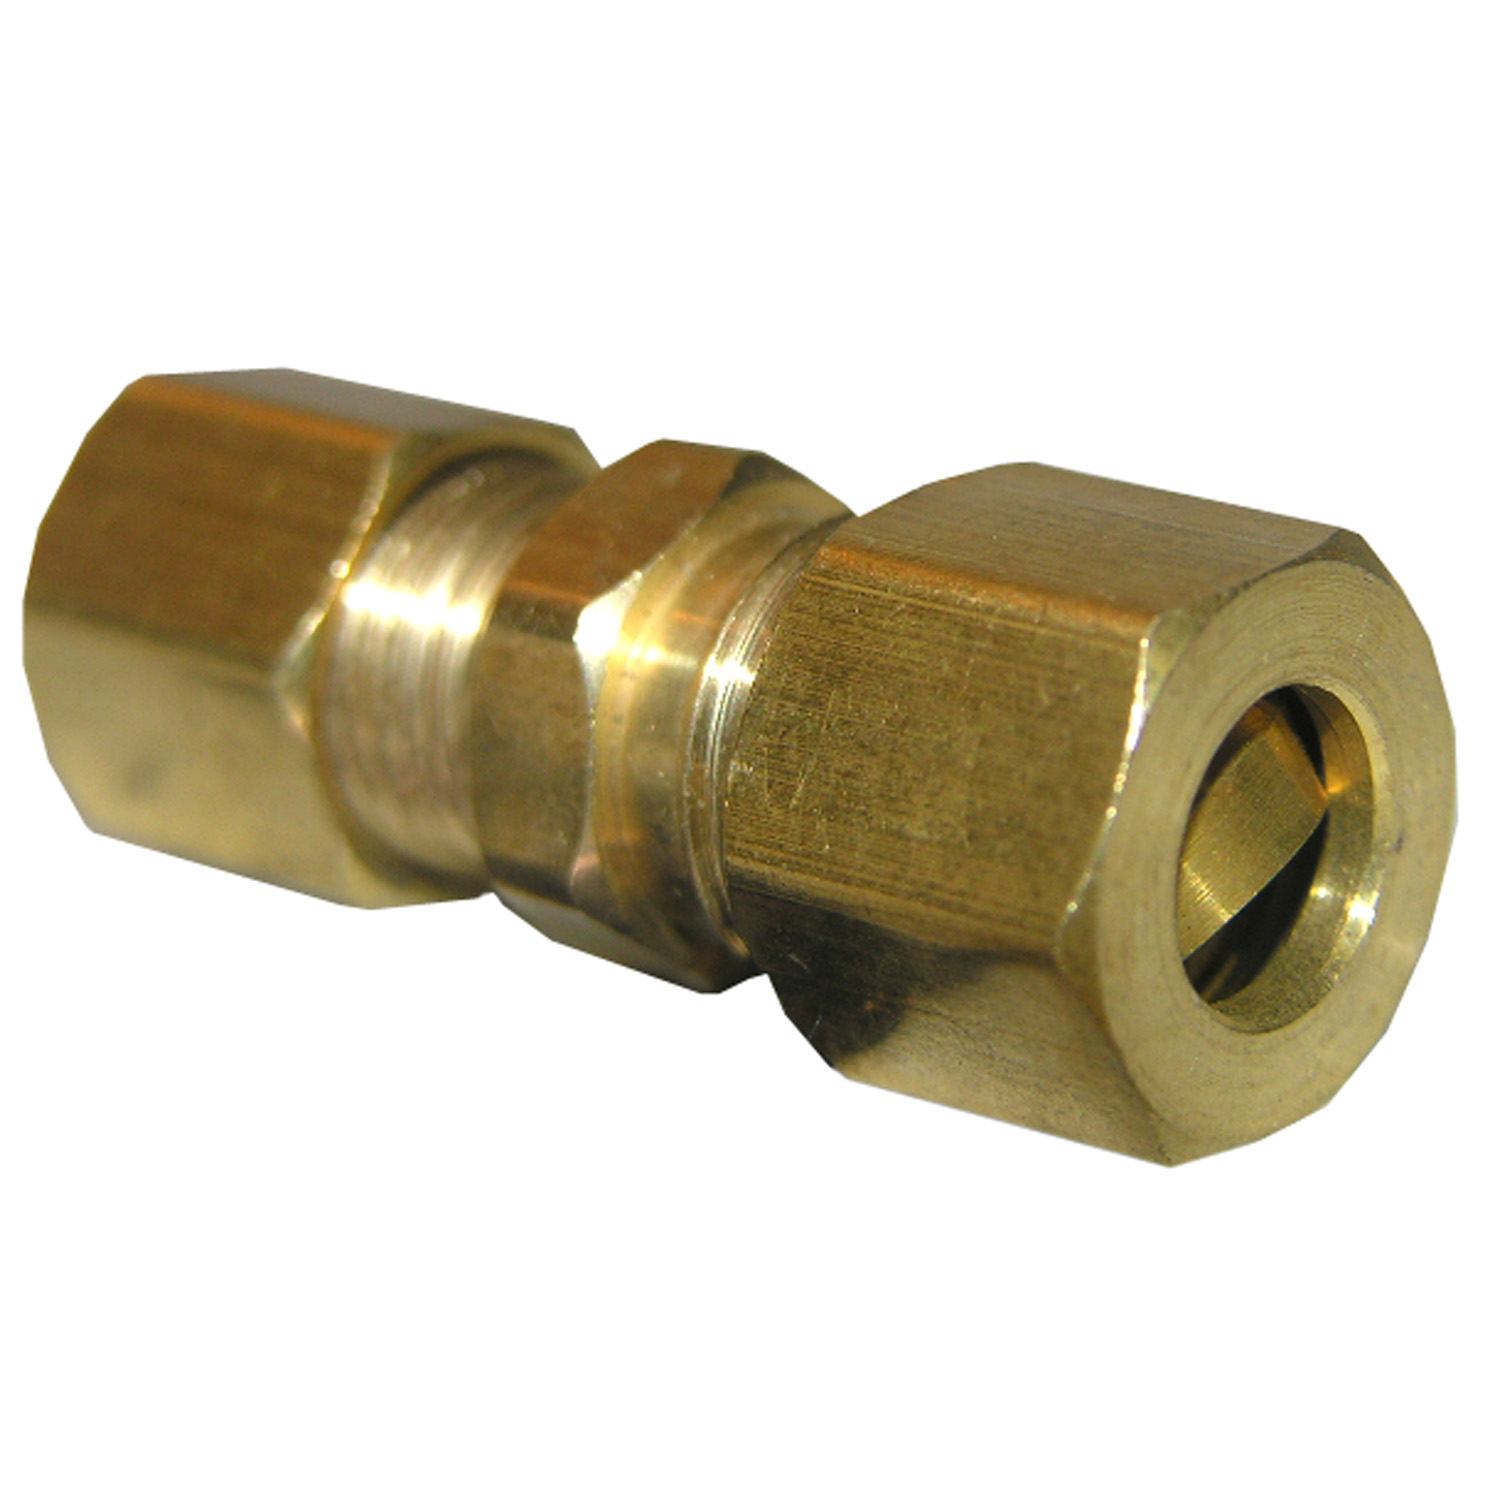 17-6223 Reducing Pipe Union, 3/8 x 5/16 in, Compression, Brass, 150 psi Pressure